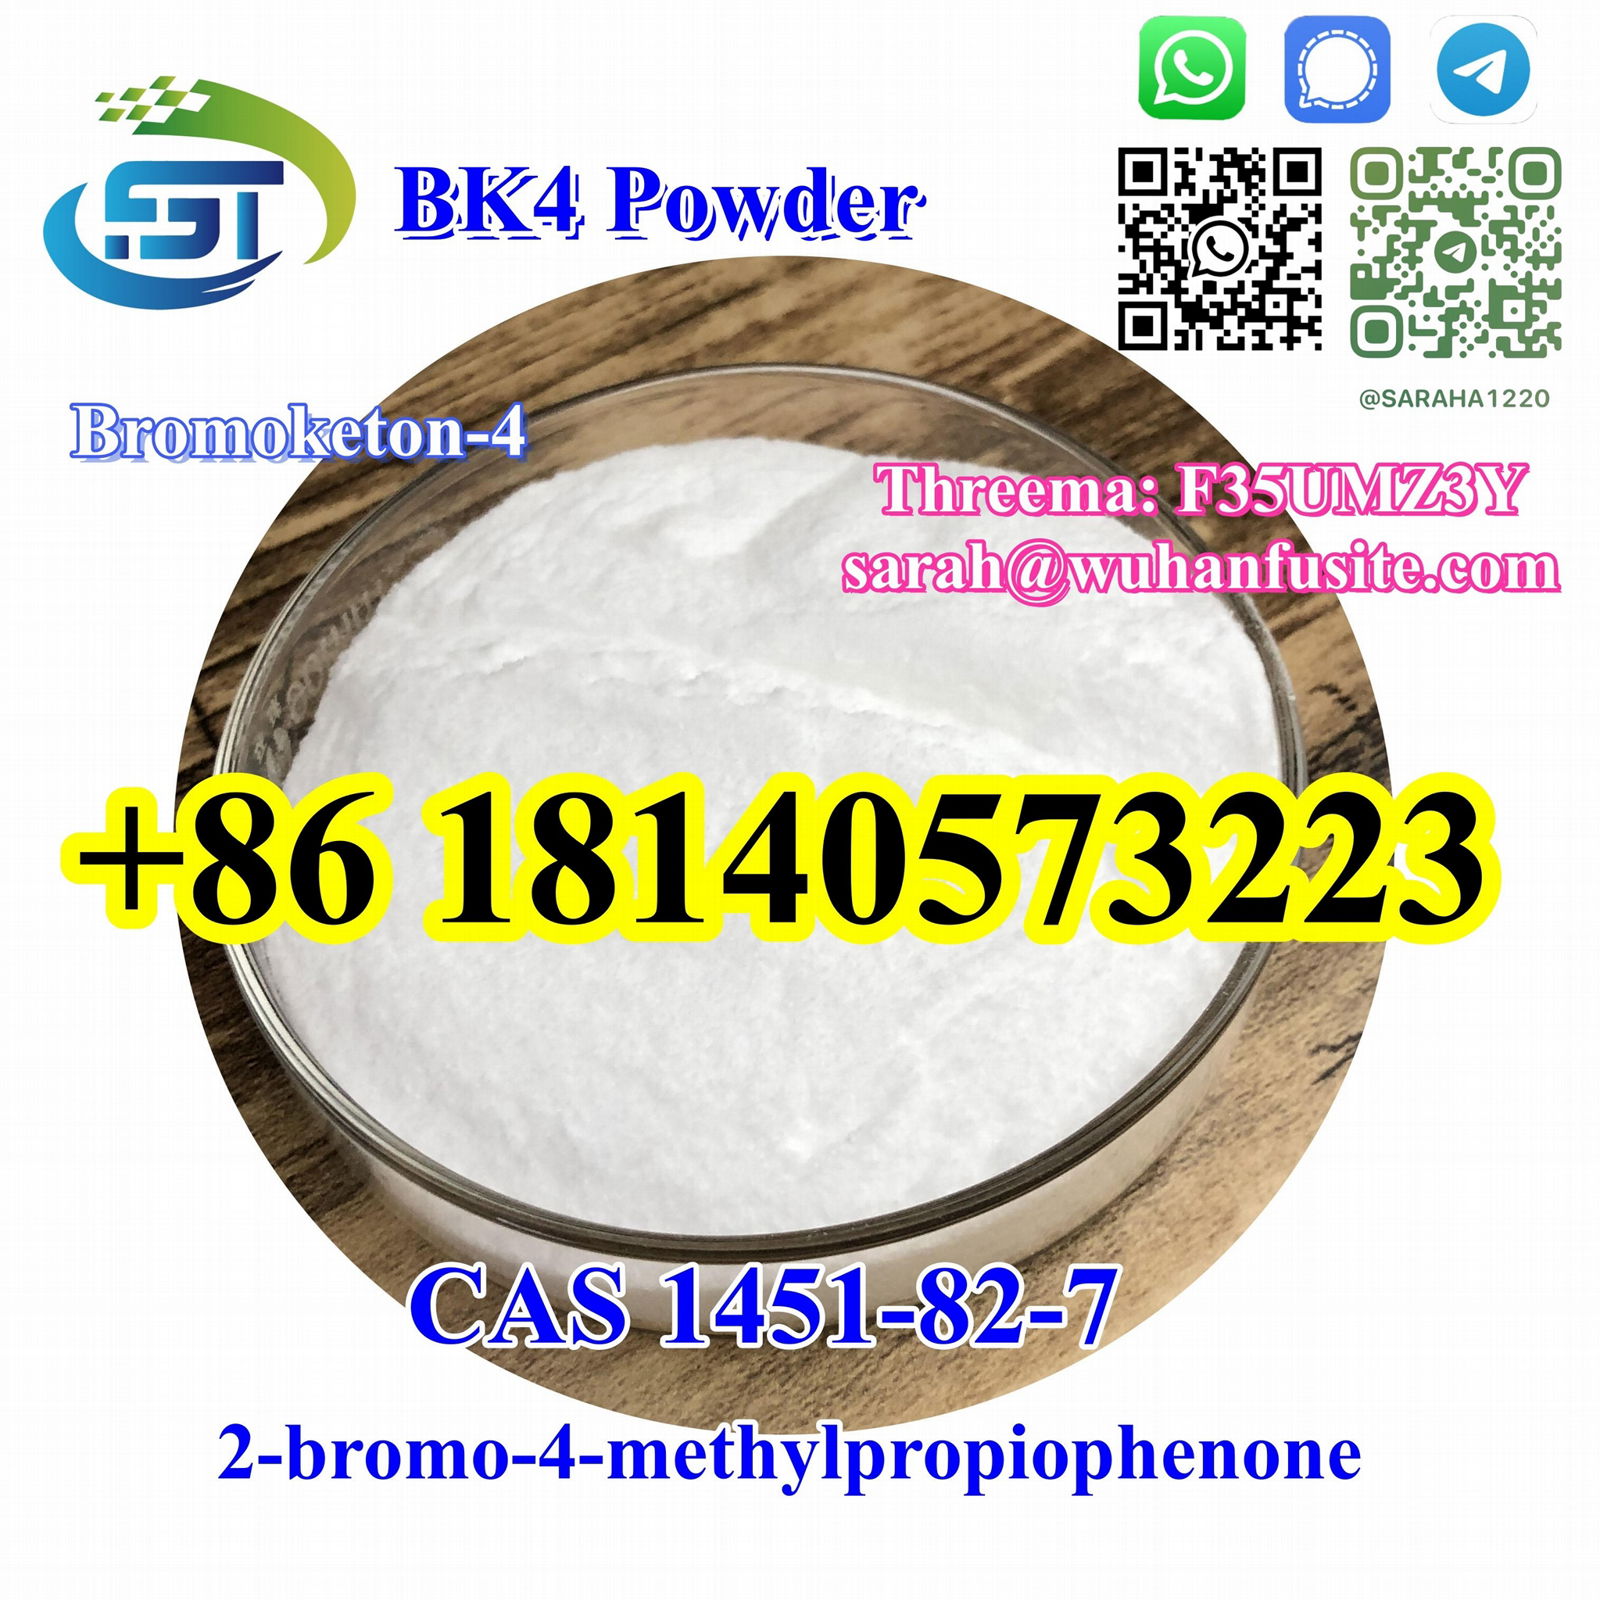 High Purity BK4 powder 2-bromo-4-methylpropiophenone CAS 1451-82-7 Bromoketon-4  2